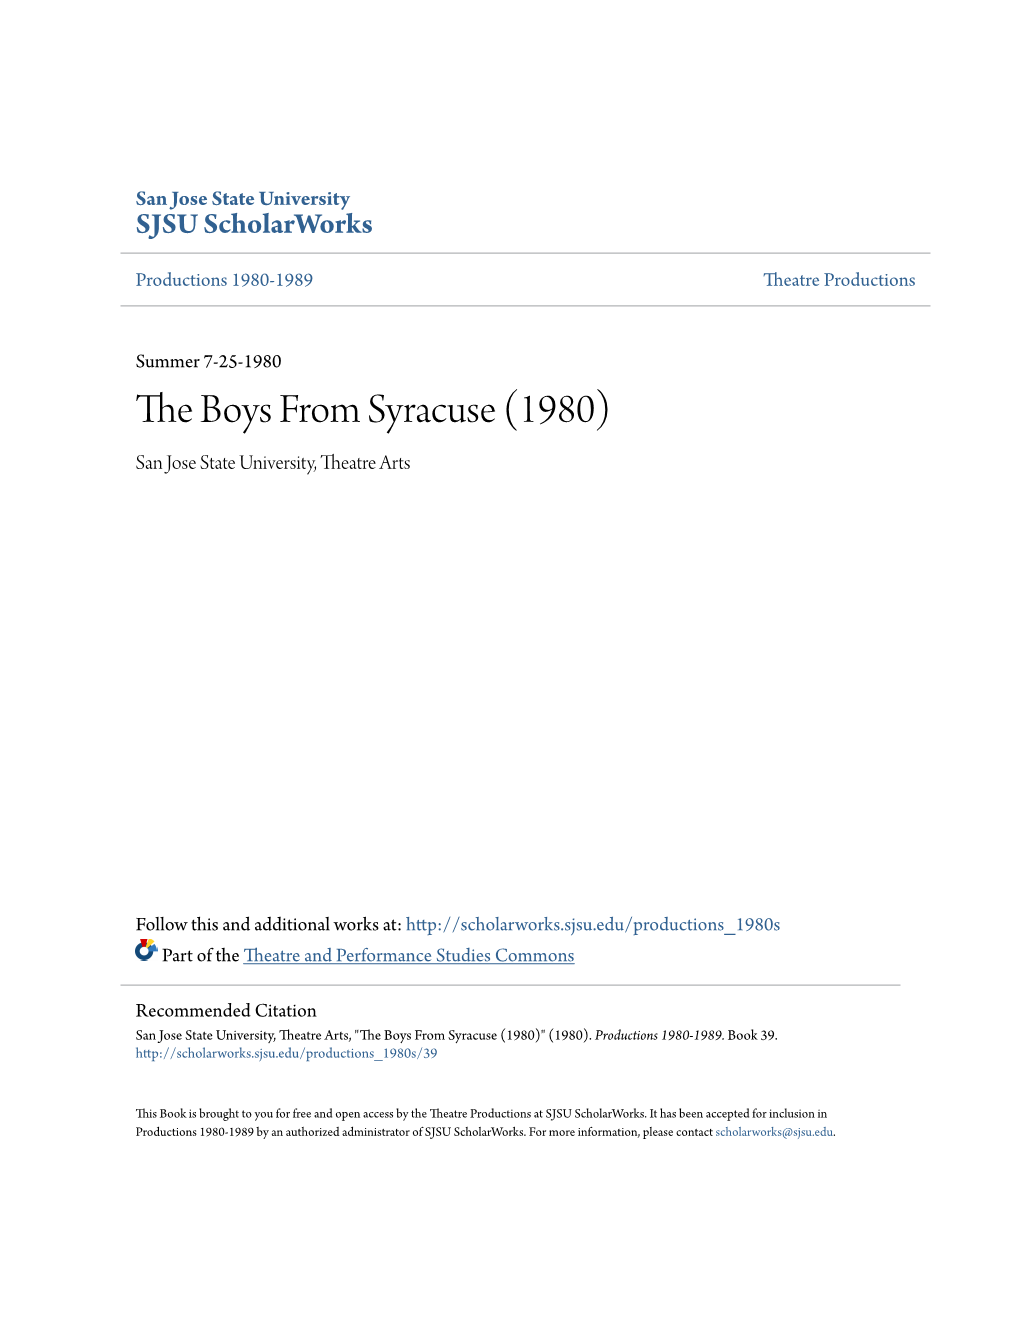 The Boys from Syracuse (1980) San Jose State University, Theatre Arts